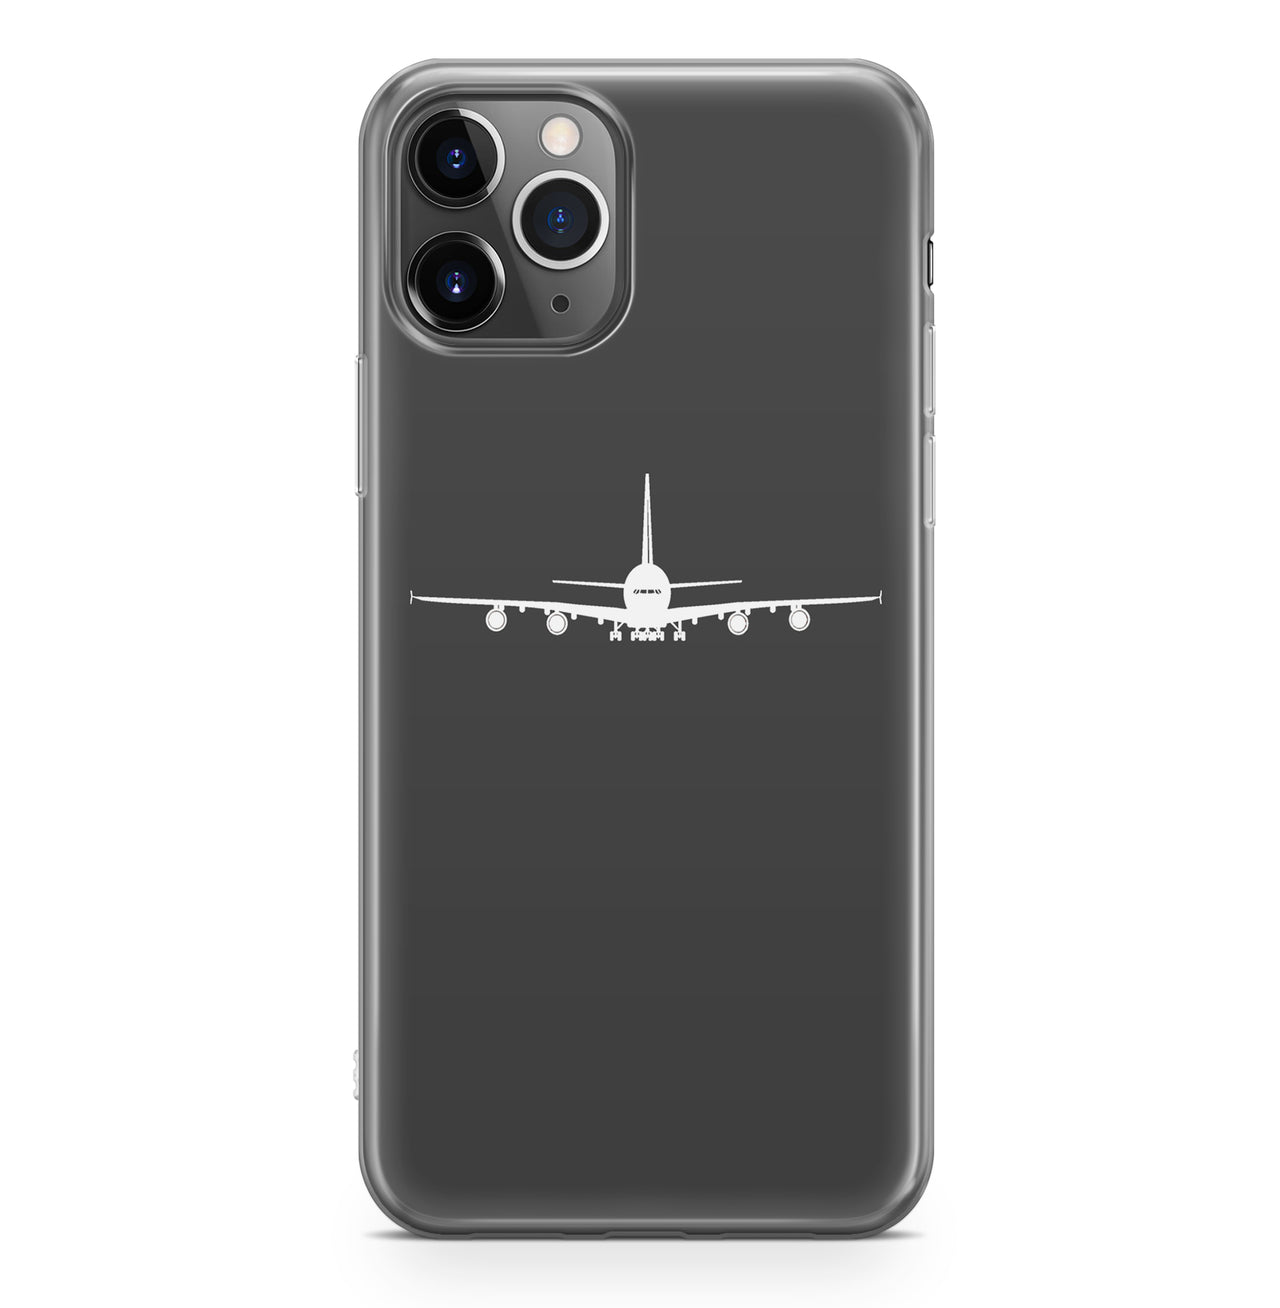 Airbus A380 Silhouette Designed iPhone Cases